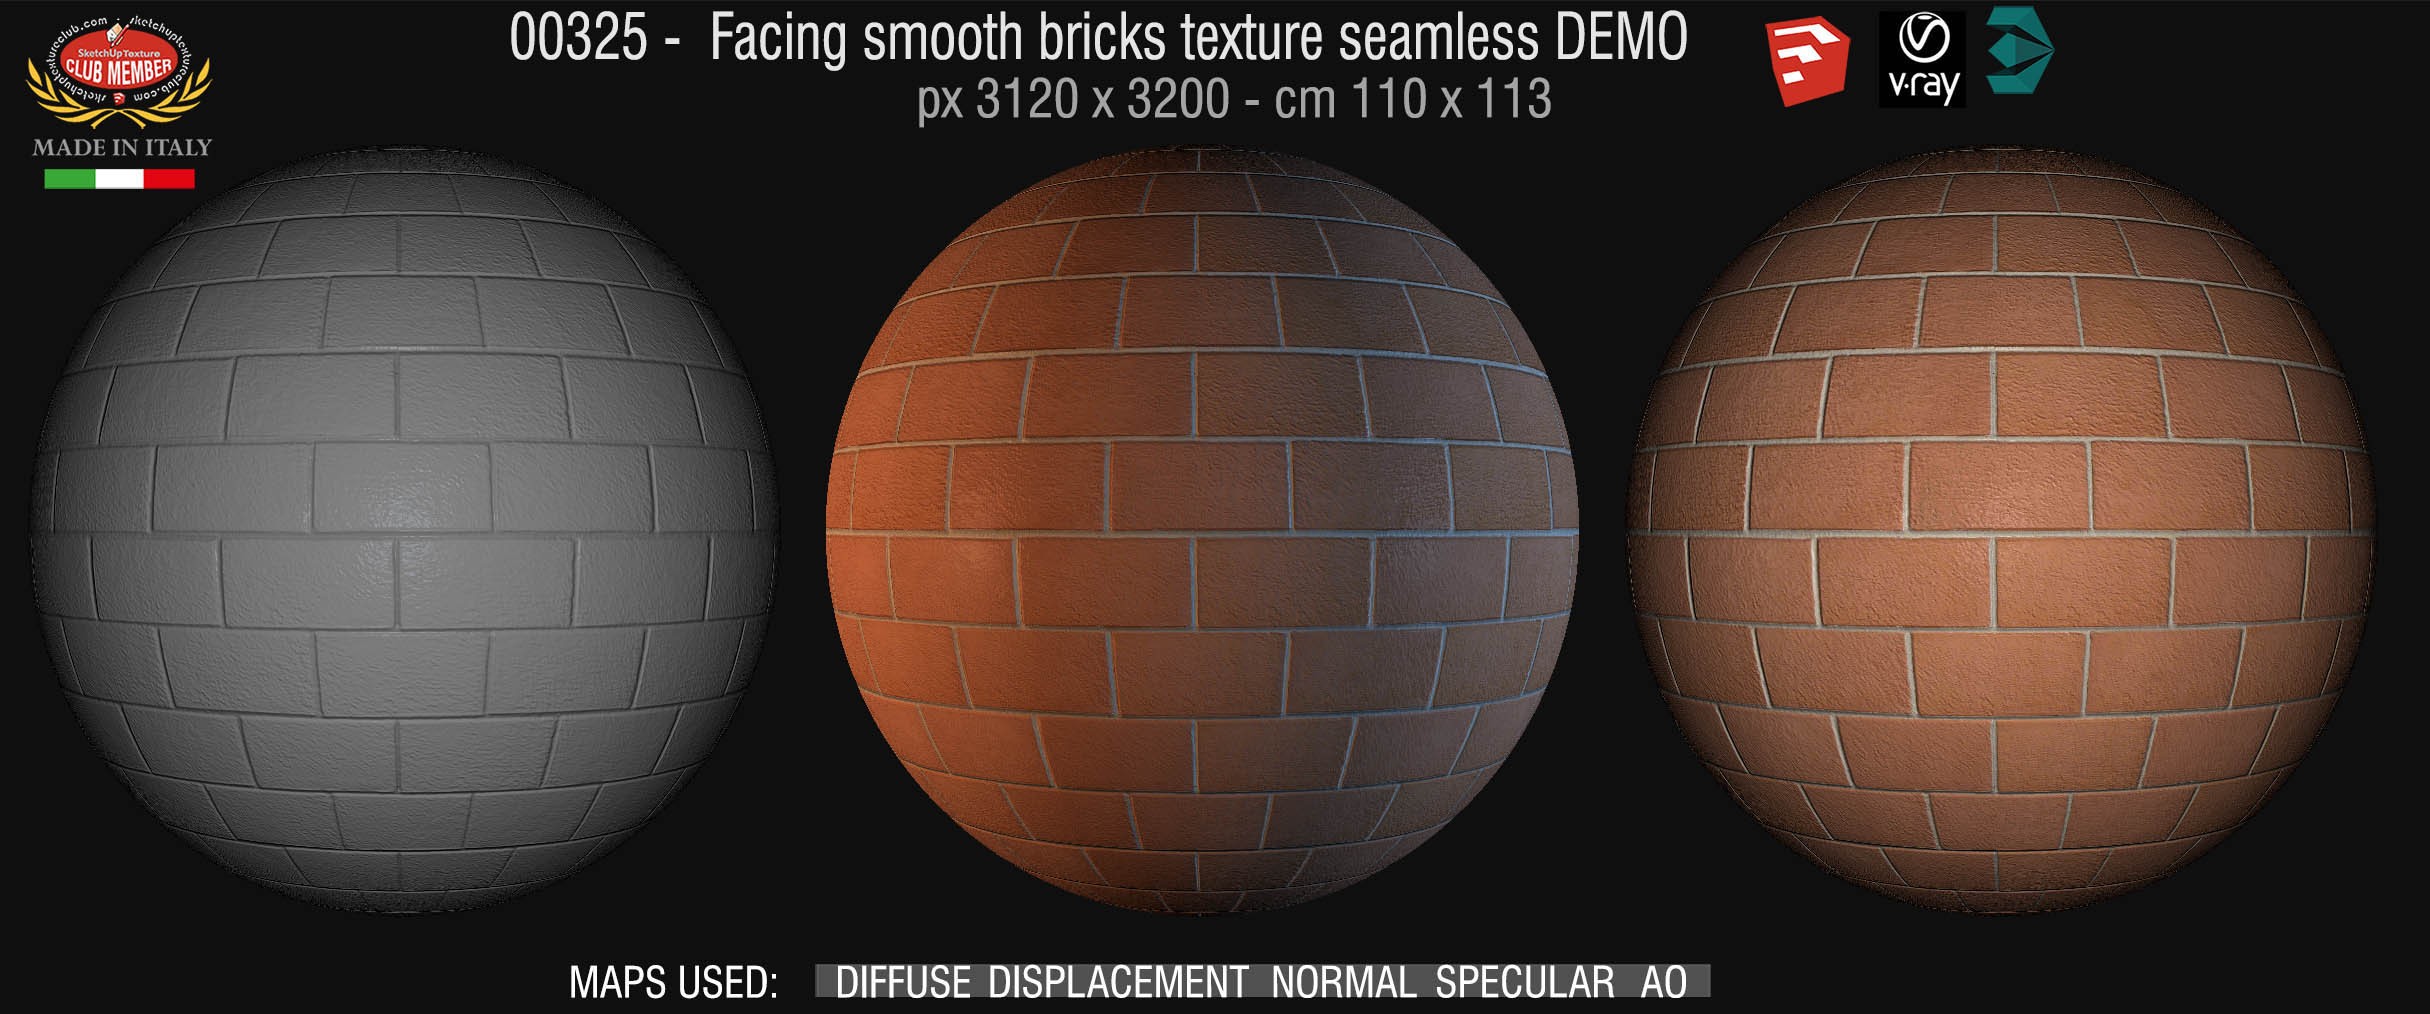 00325 Facing smooth bricks texture seamless + maps DEMO